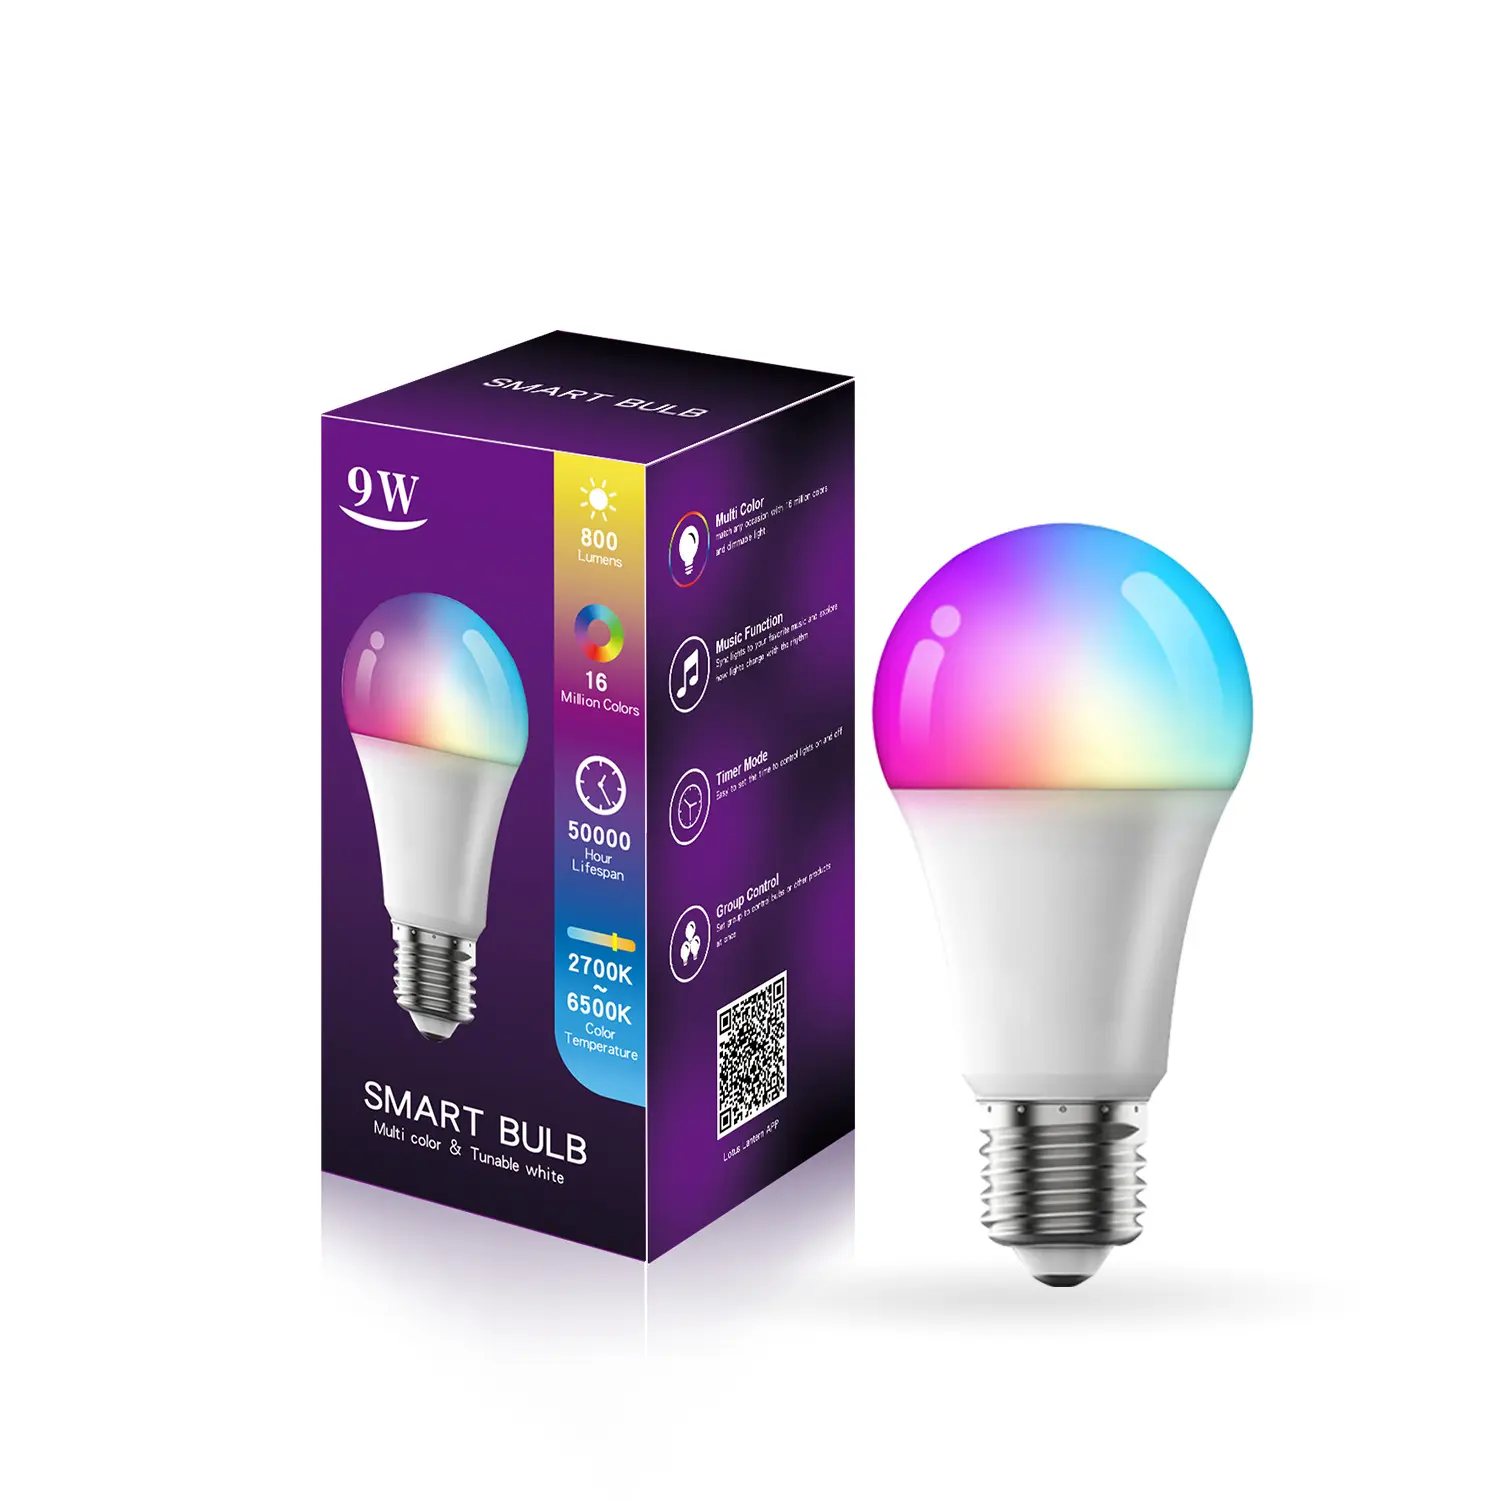 Smart Light Bulb Rgb Cold/Warm light Color Changing Dimmable Led Smart Bulb A19 E14 E27 E26 B22 9w Equivalent